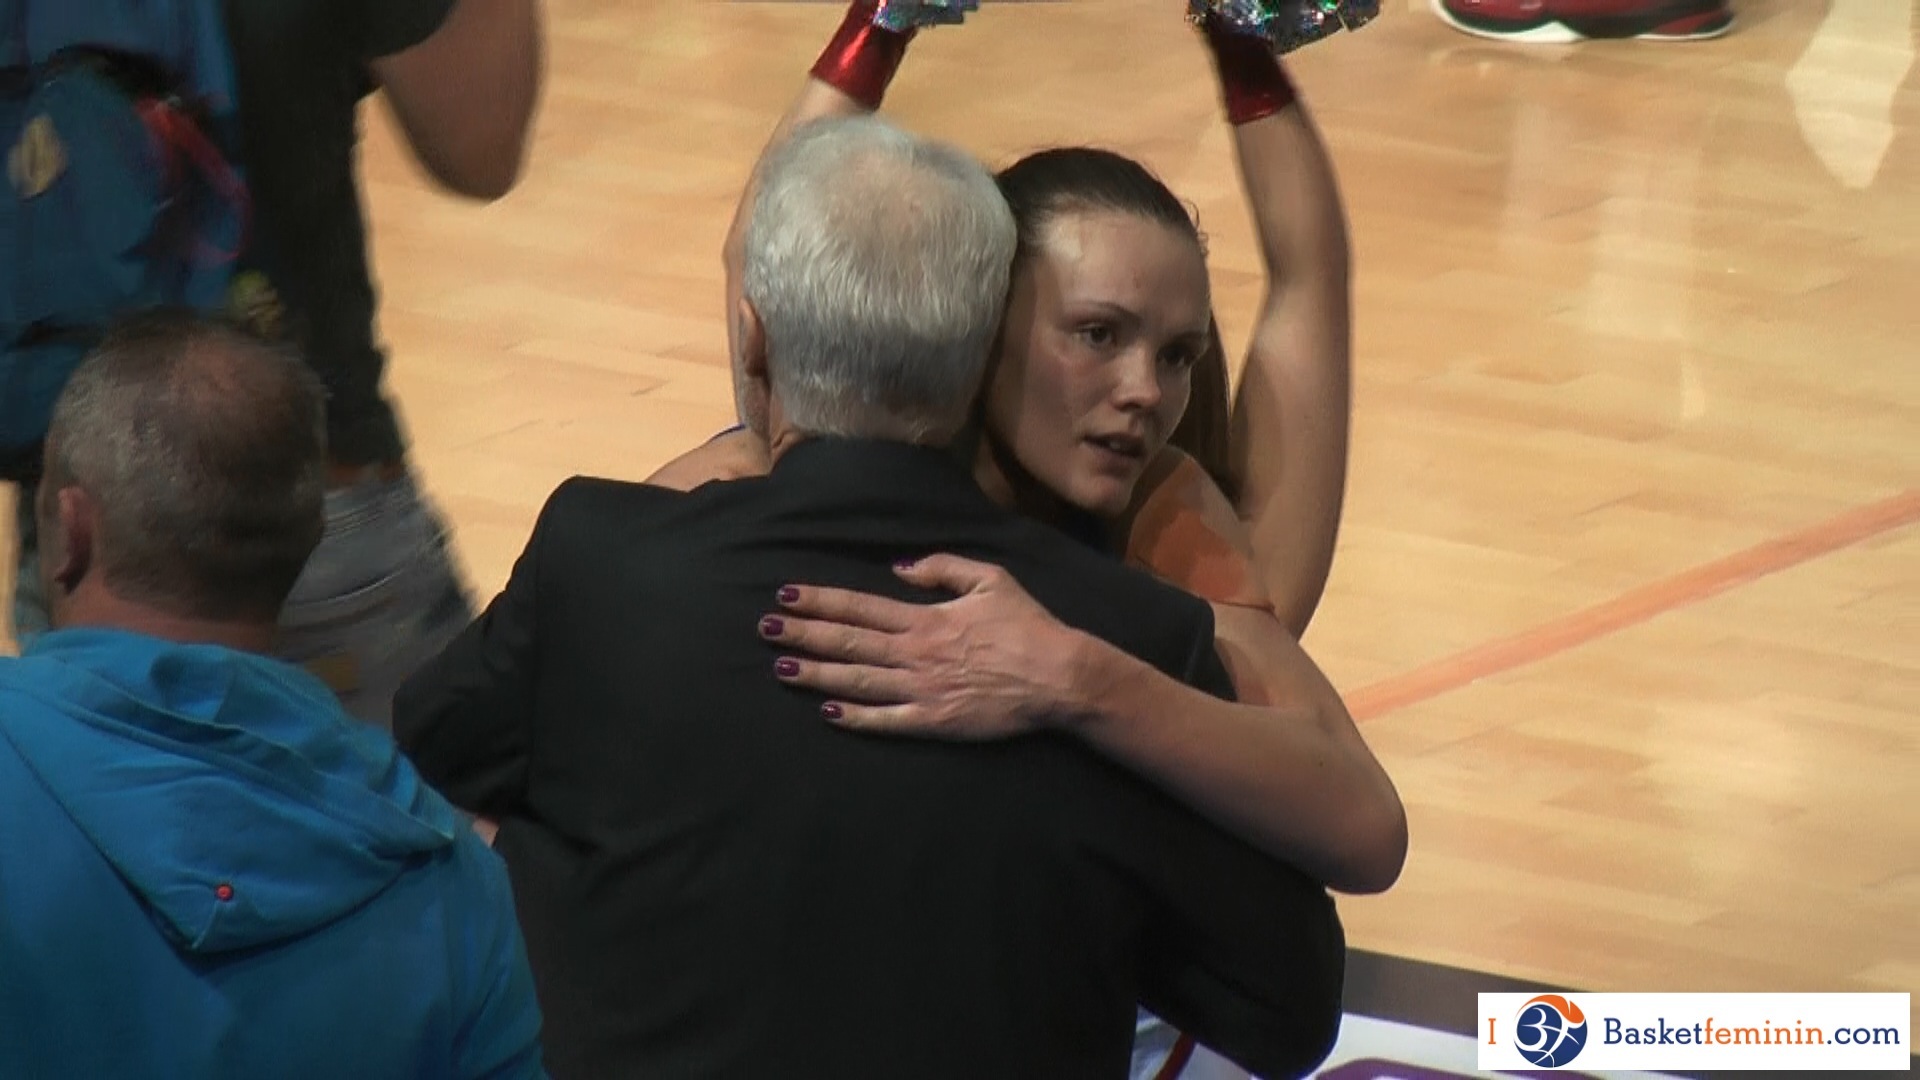 Anete Steinberga étincellante dans les bras de son coach, Ainars Zvirgdins